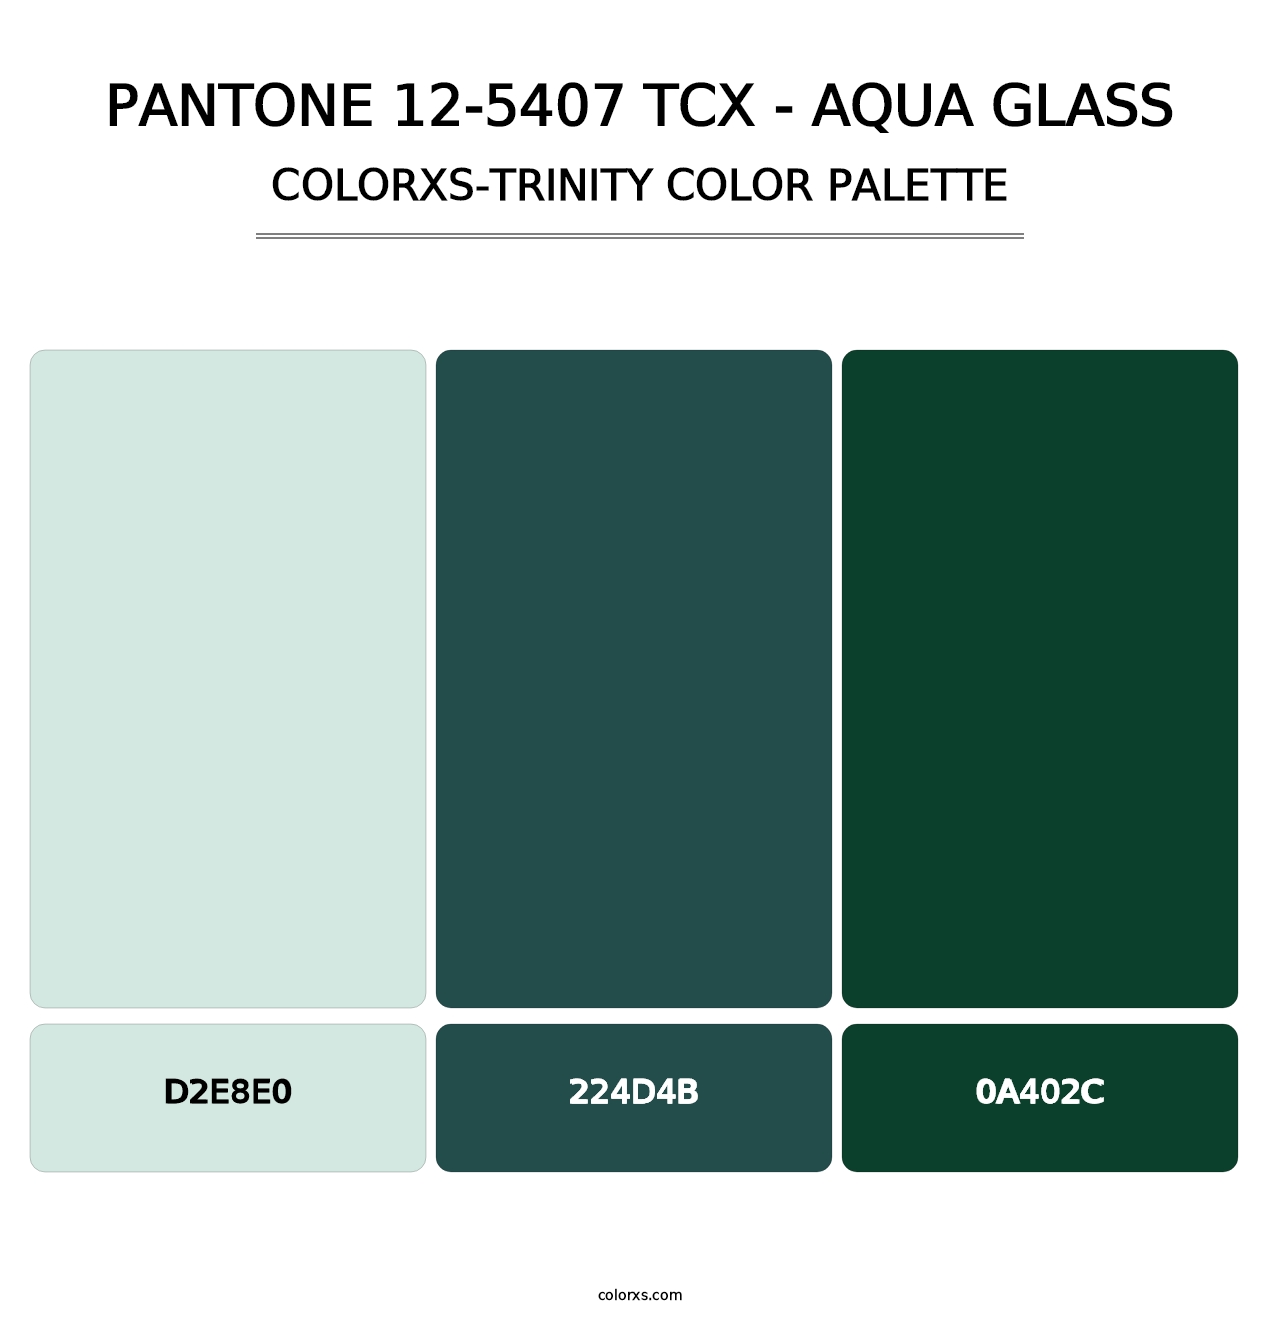 PANTONE 12-5407 TCX - Aqua Glass - Colorxs Trinity Palette